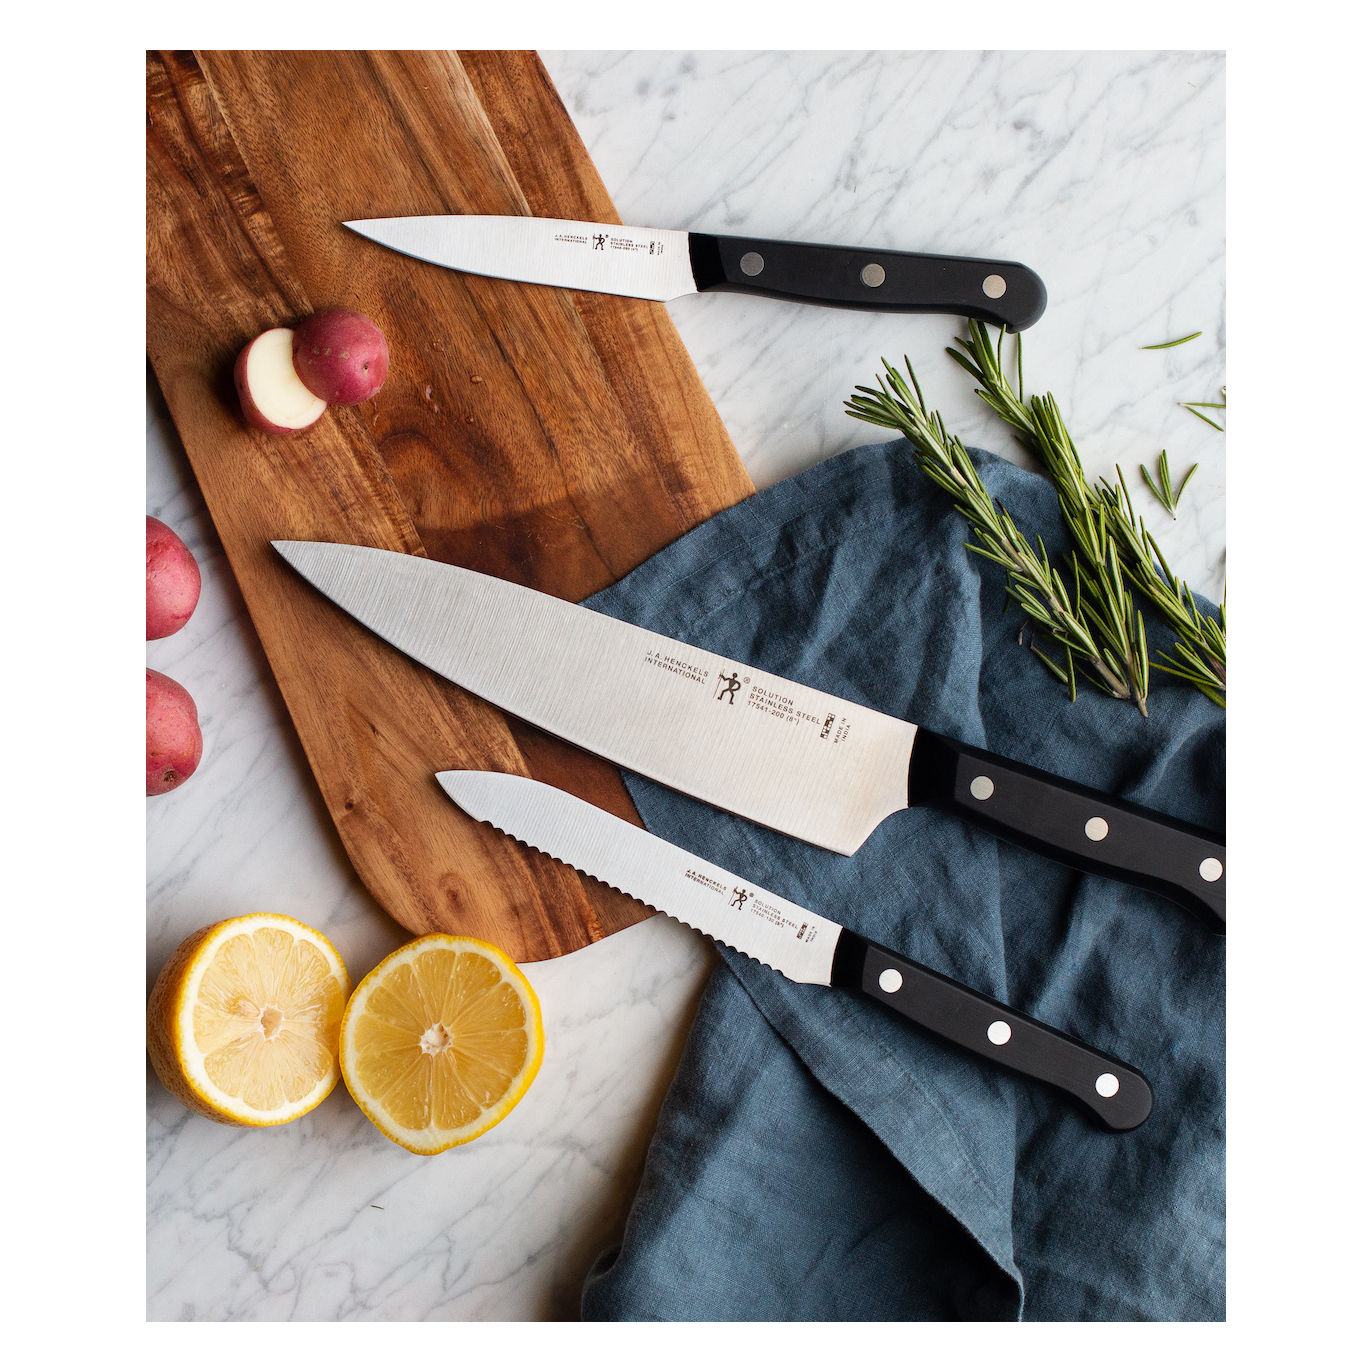 Emeril Lagasse 8 Stainless Steel Steak Knife Set Stamped Kitchen Knives  Cutlery